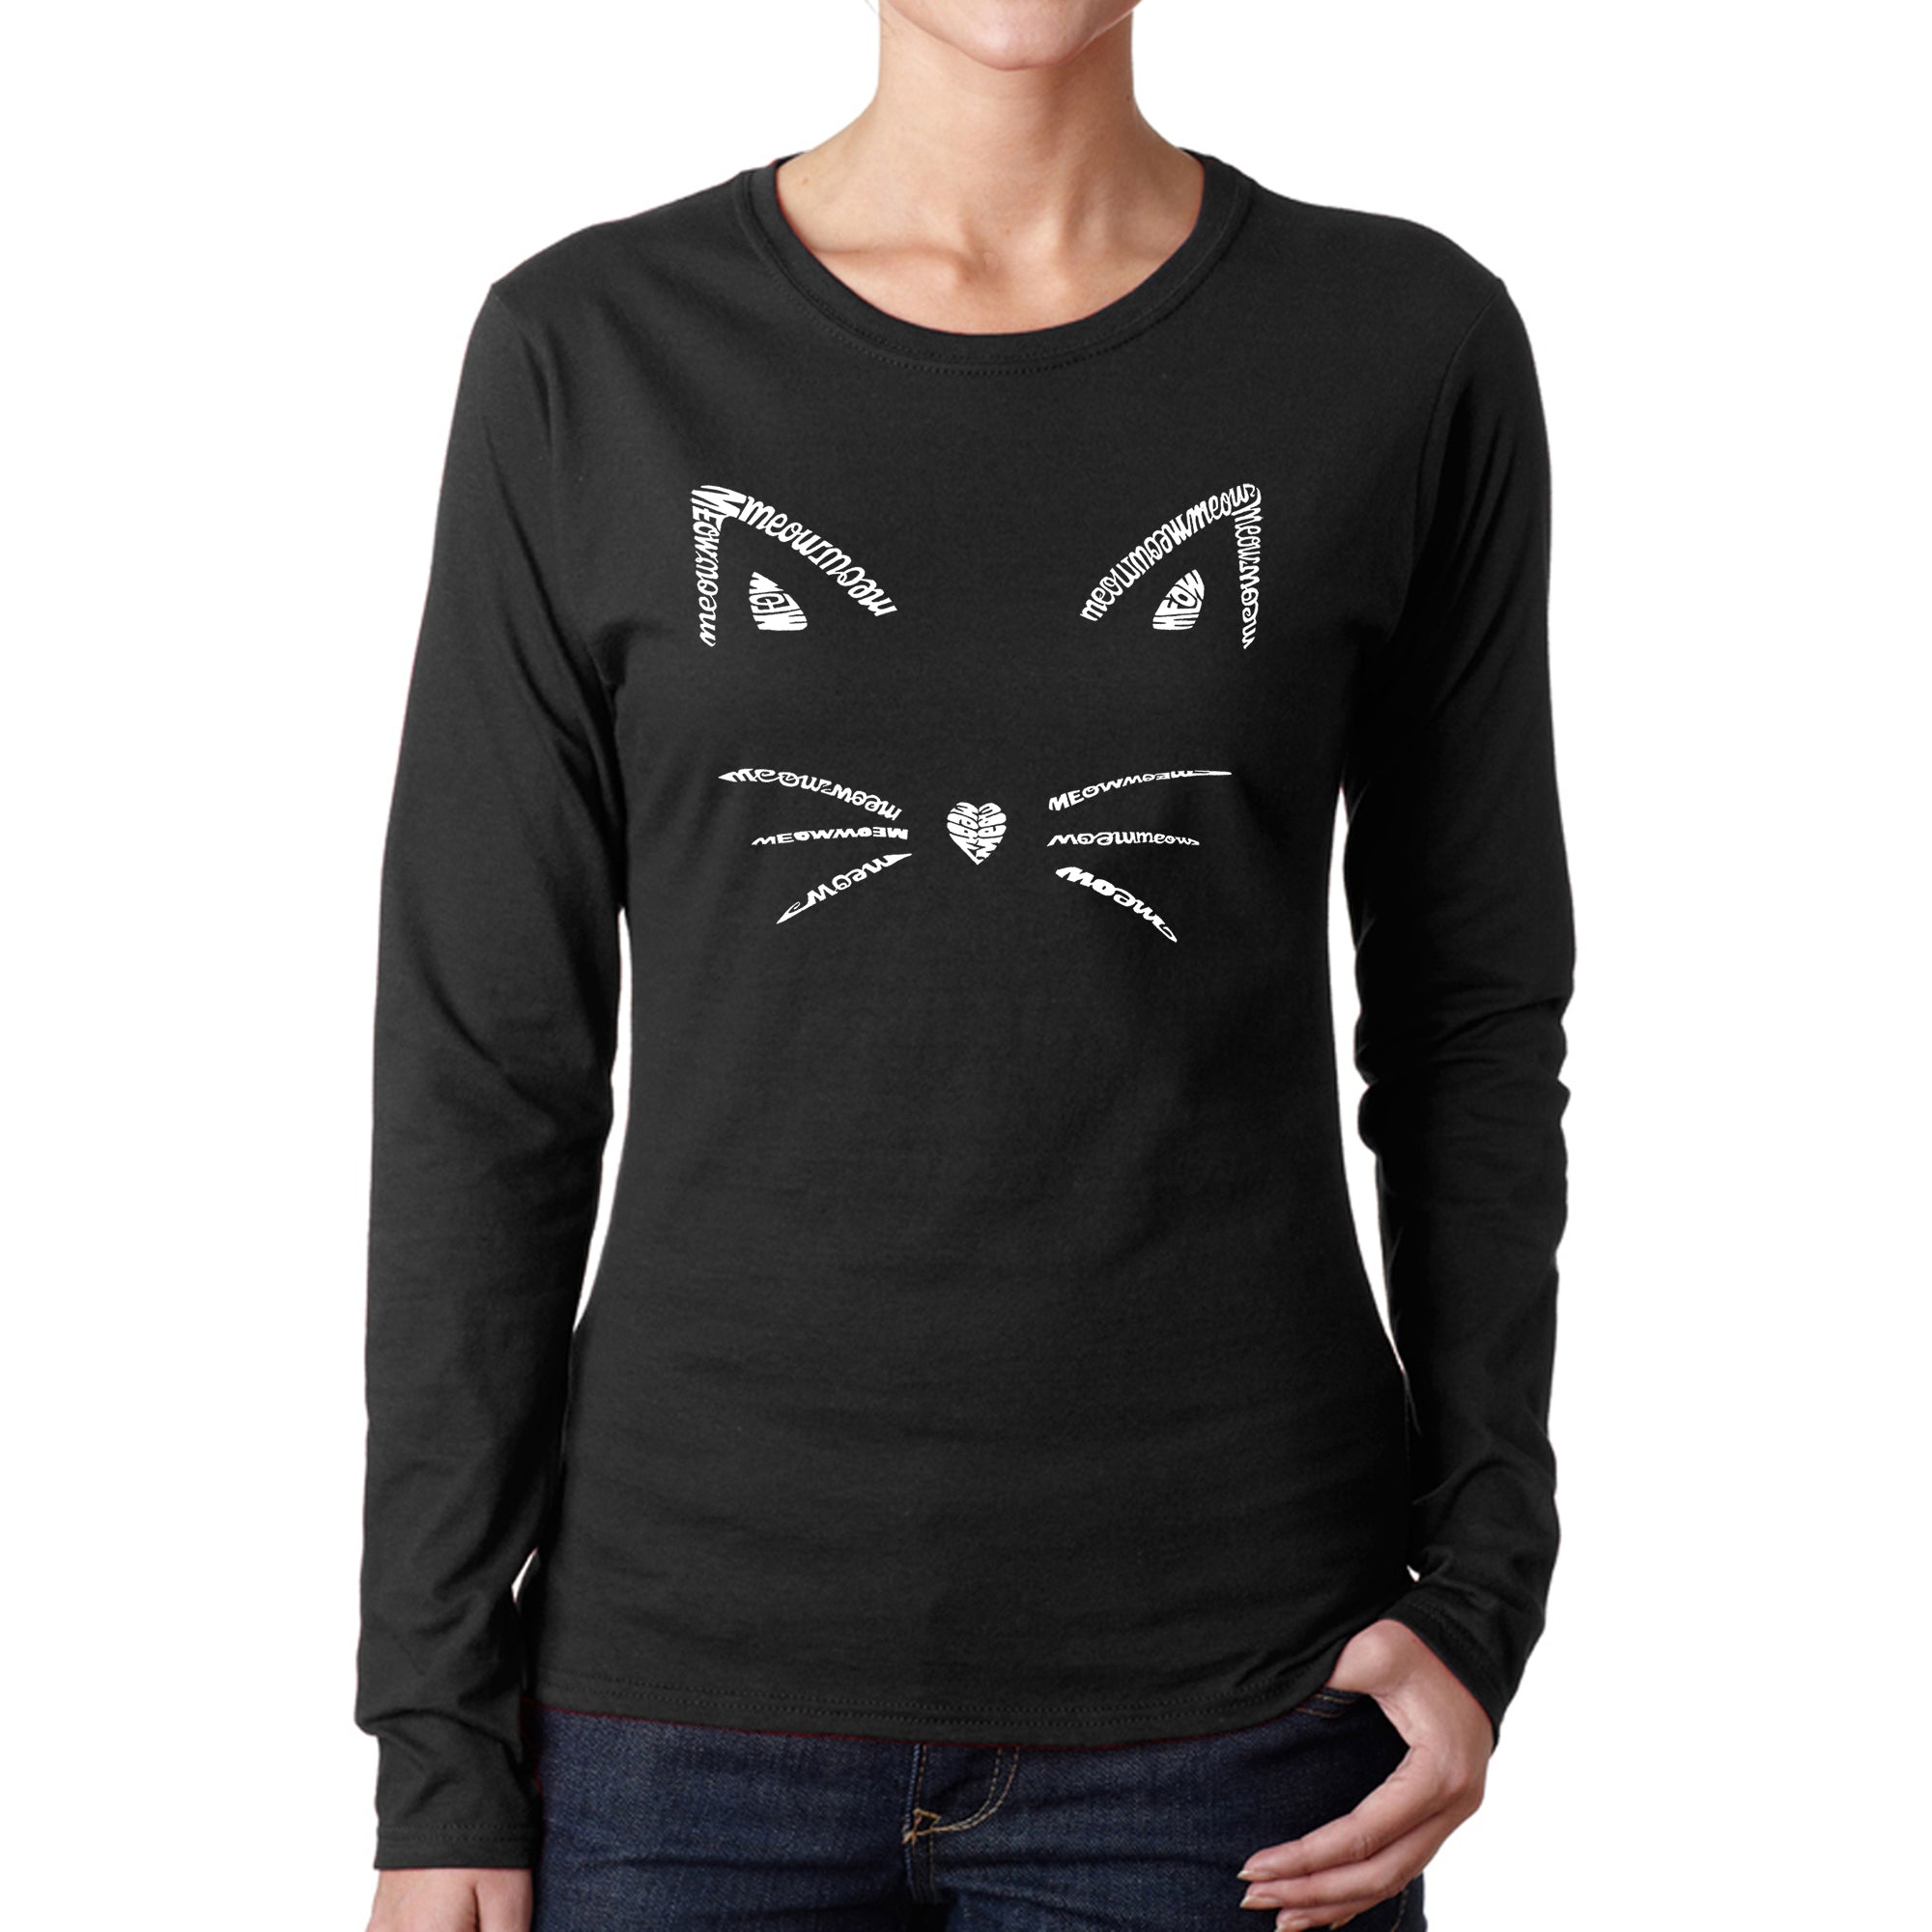 Whiskers - Women's Word Art Long Sleeve T-Shirt - Black - Medium